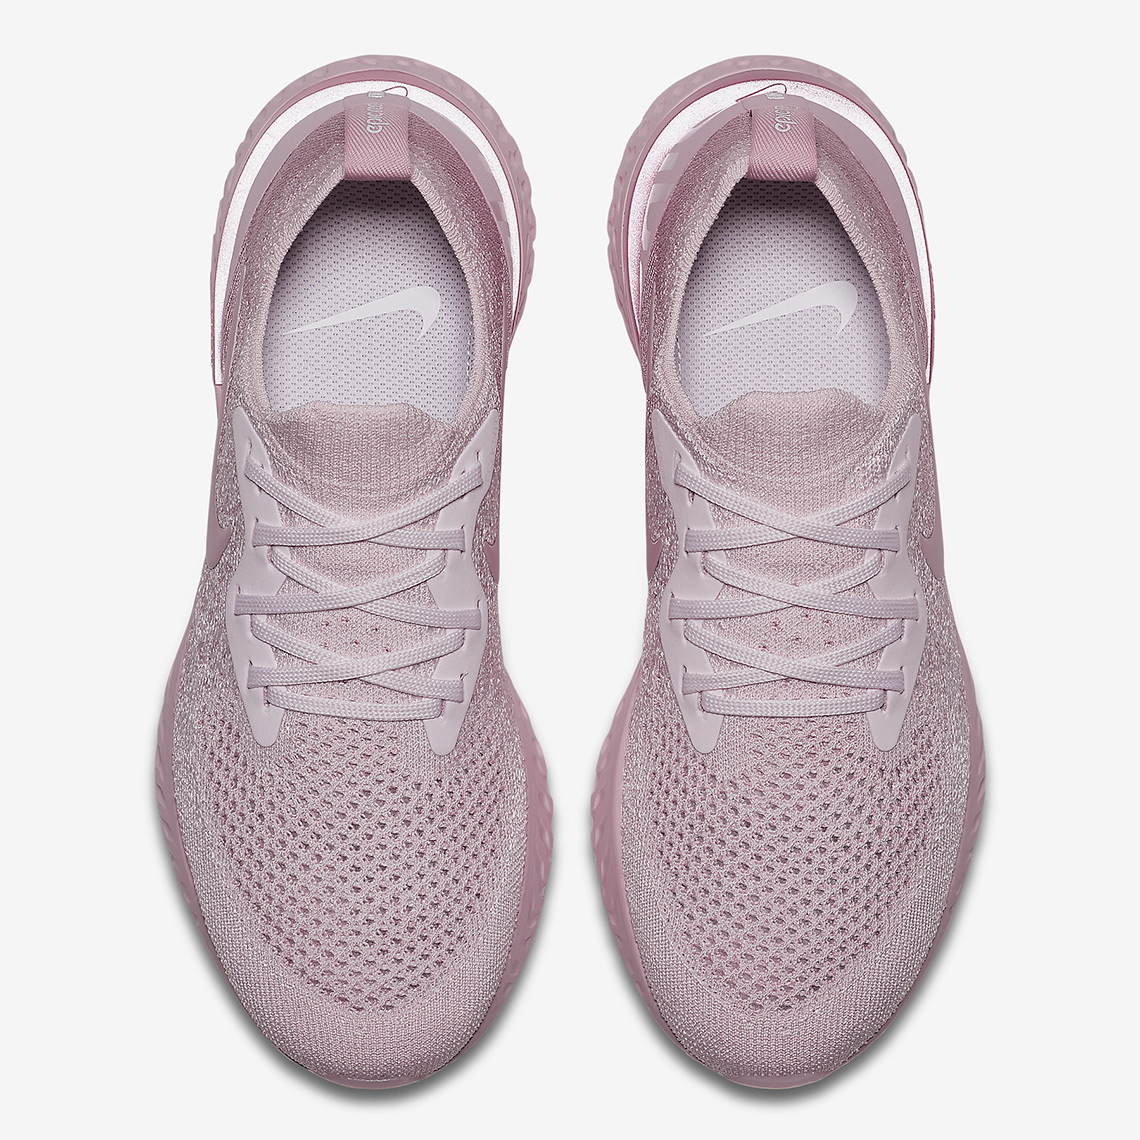 Nike Epic Flyknit "Pearl Pink" Release | SneakerNews.com